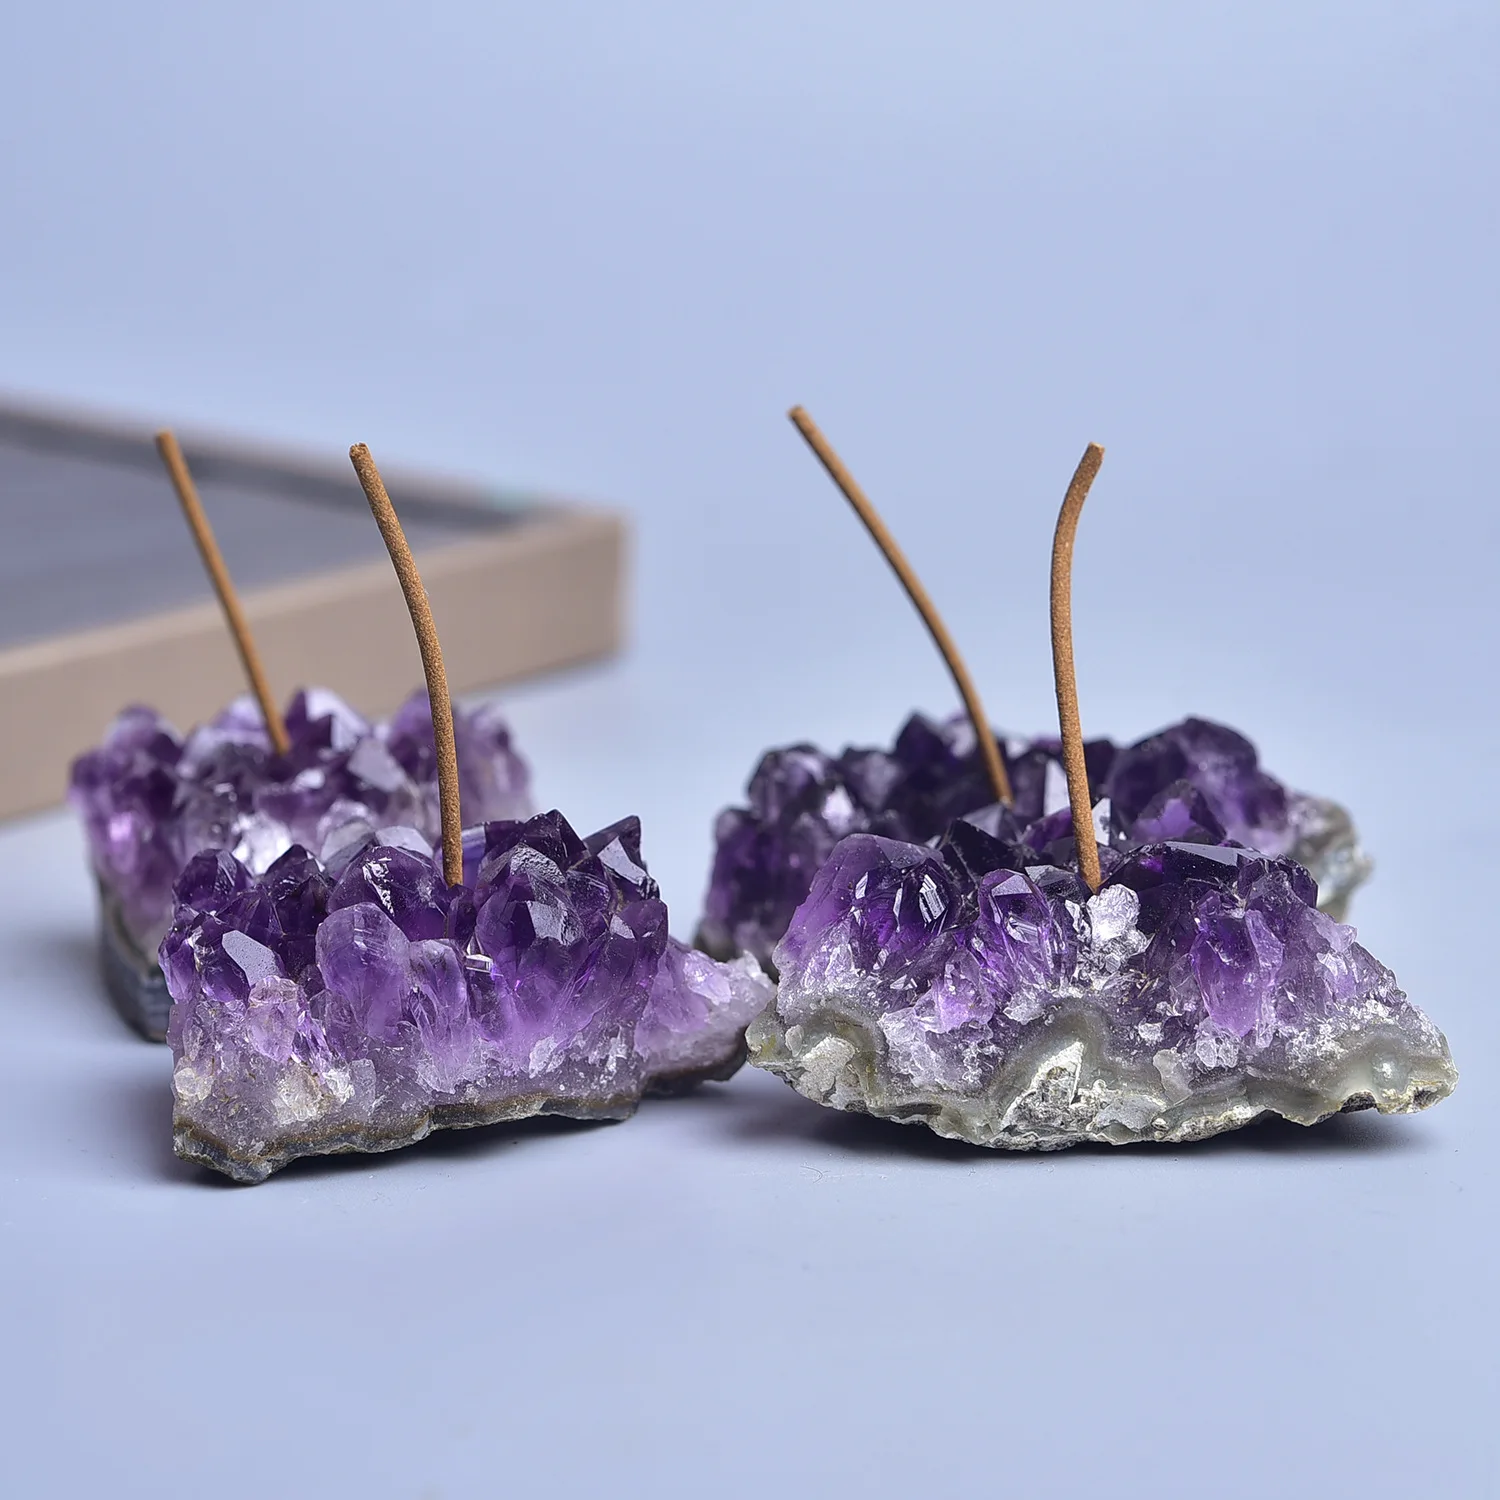 Natural Amethyst Cluster Incense Holder Ornament Irregular Rock Purple Crystal Quartz Healing Stones Incense Burner Buddha Decor